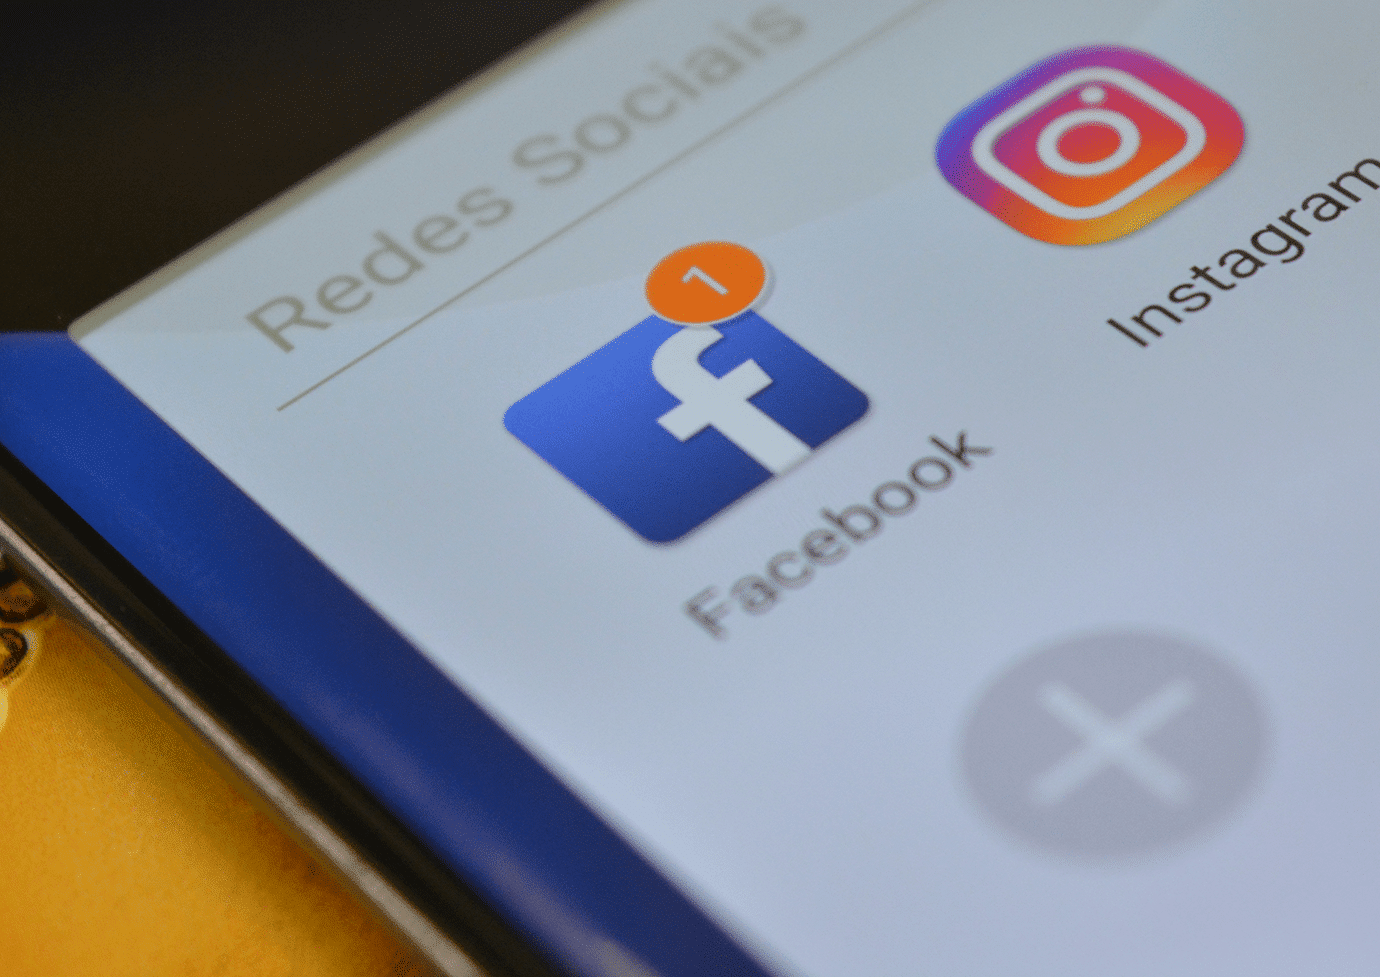 Facebook e Instagram barram menores de 13 anos